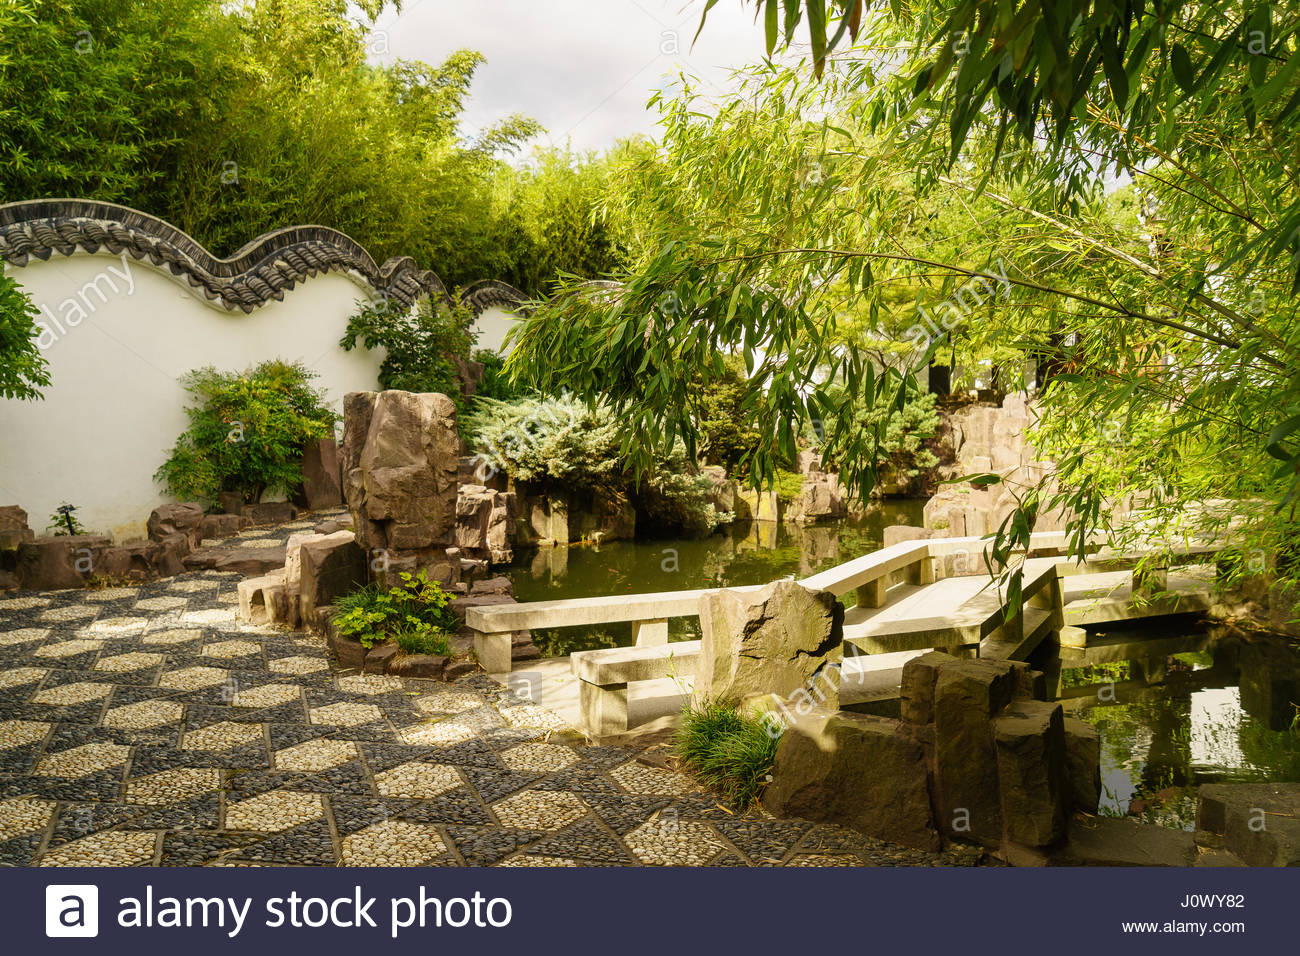 New York Chinese Scholar S Garden Stock Photo 138253138 Alamy